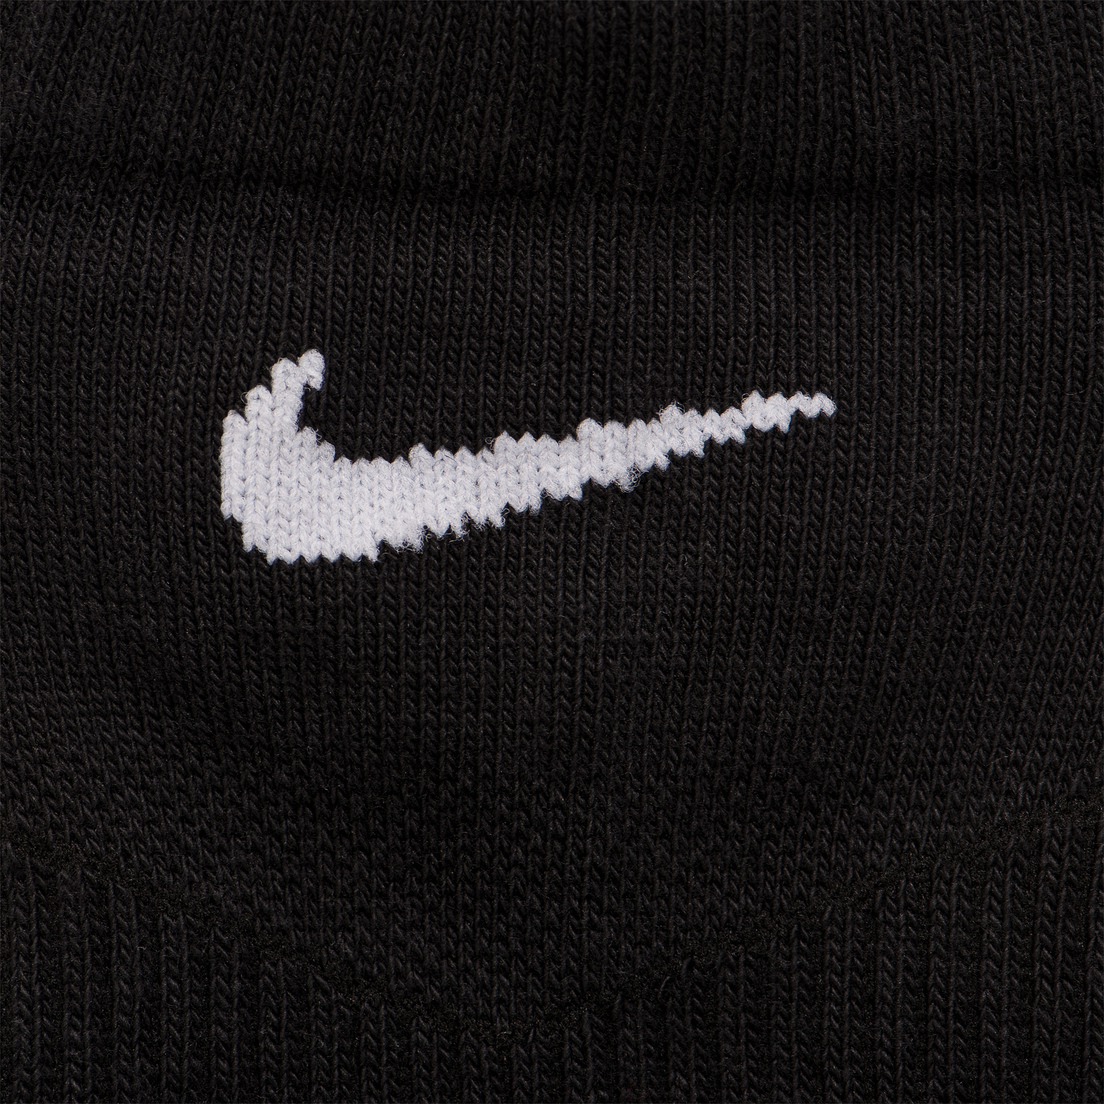 Nike Комплект носков 3-Pack Lightweight No-Show